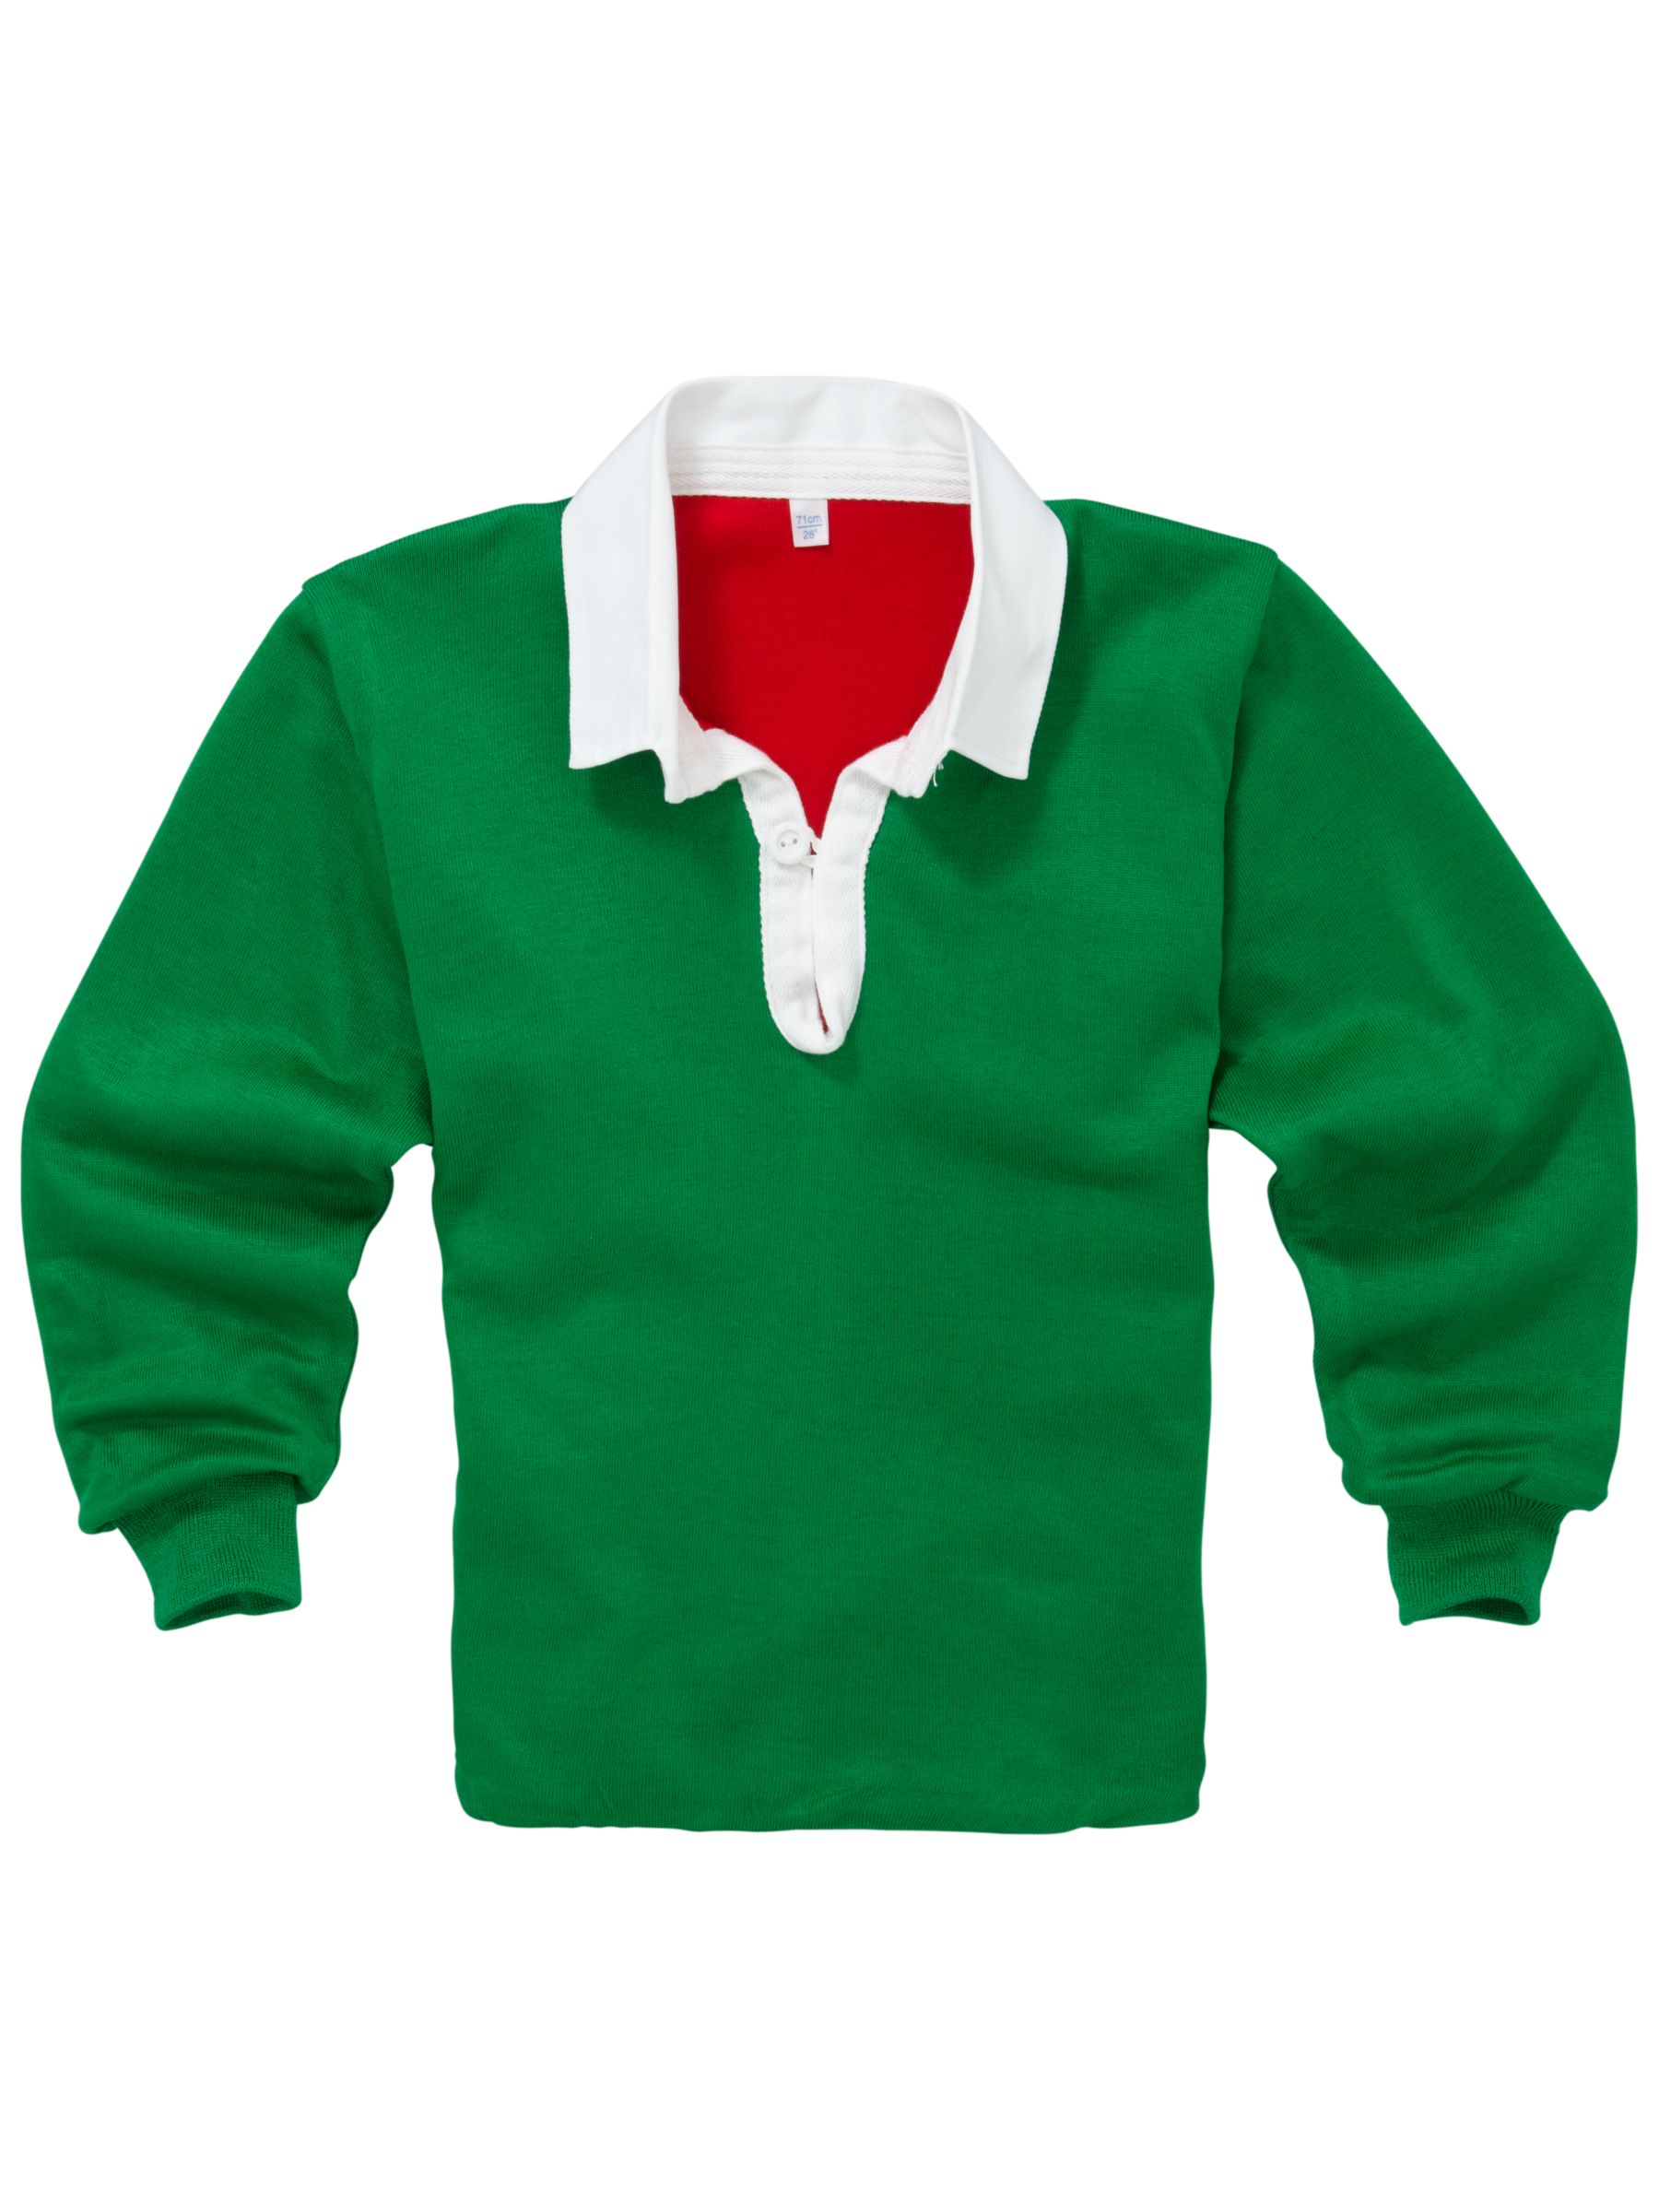 Arnold House School Boys Rugby Shirt,